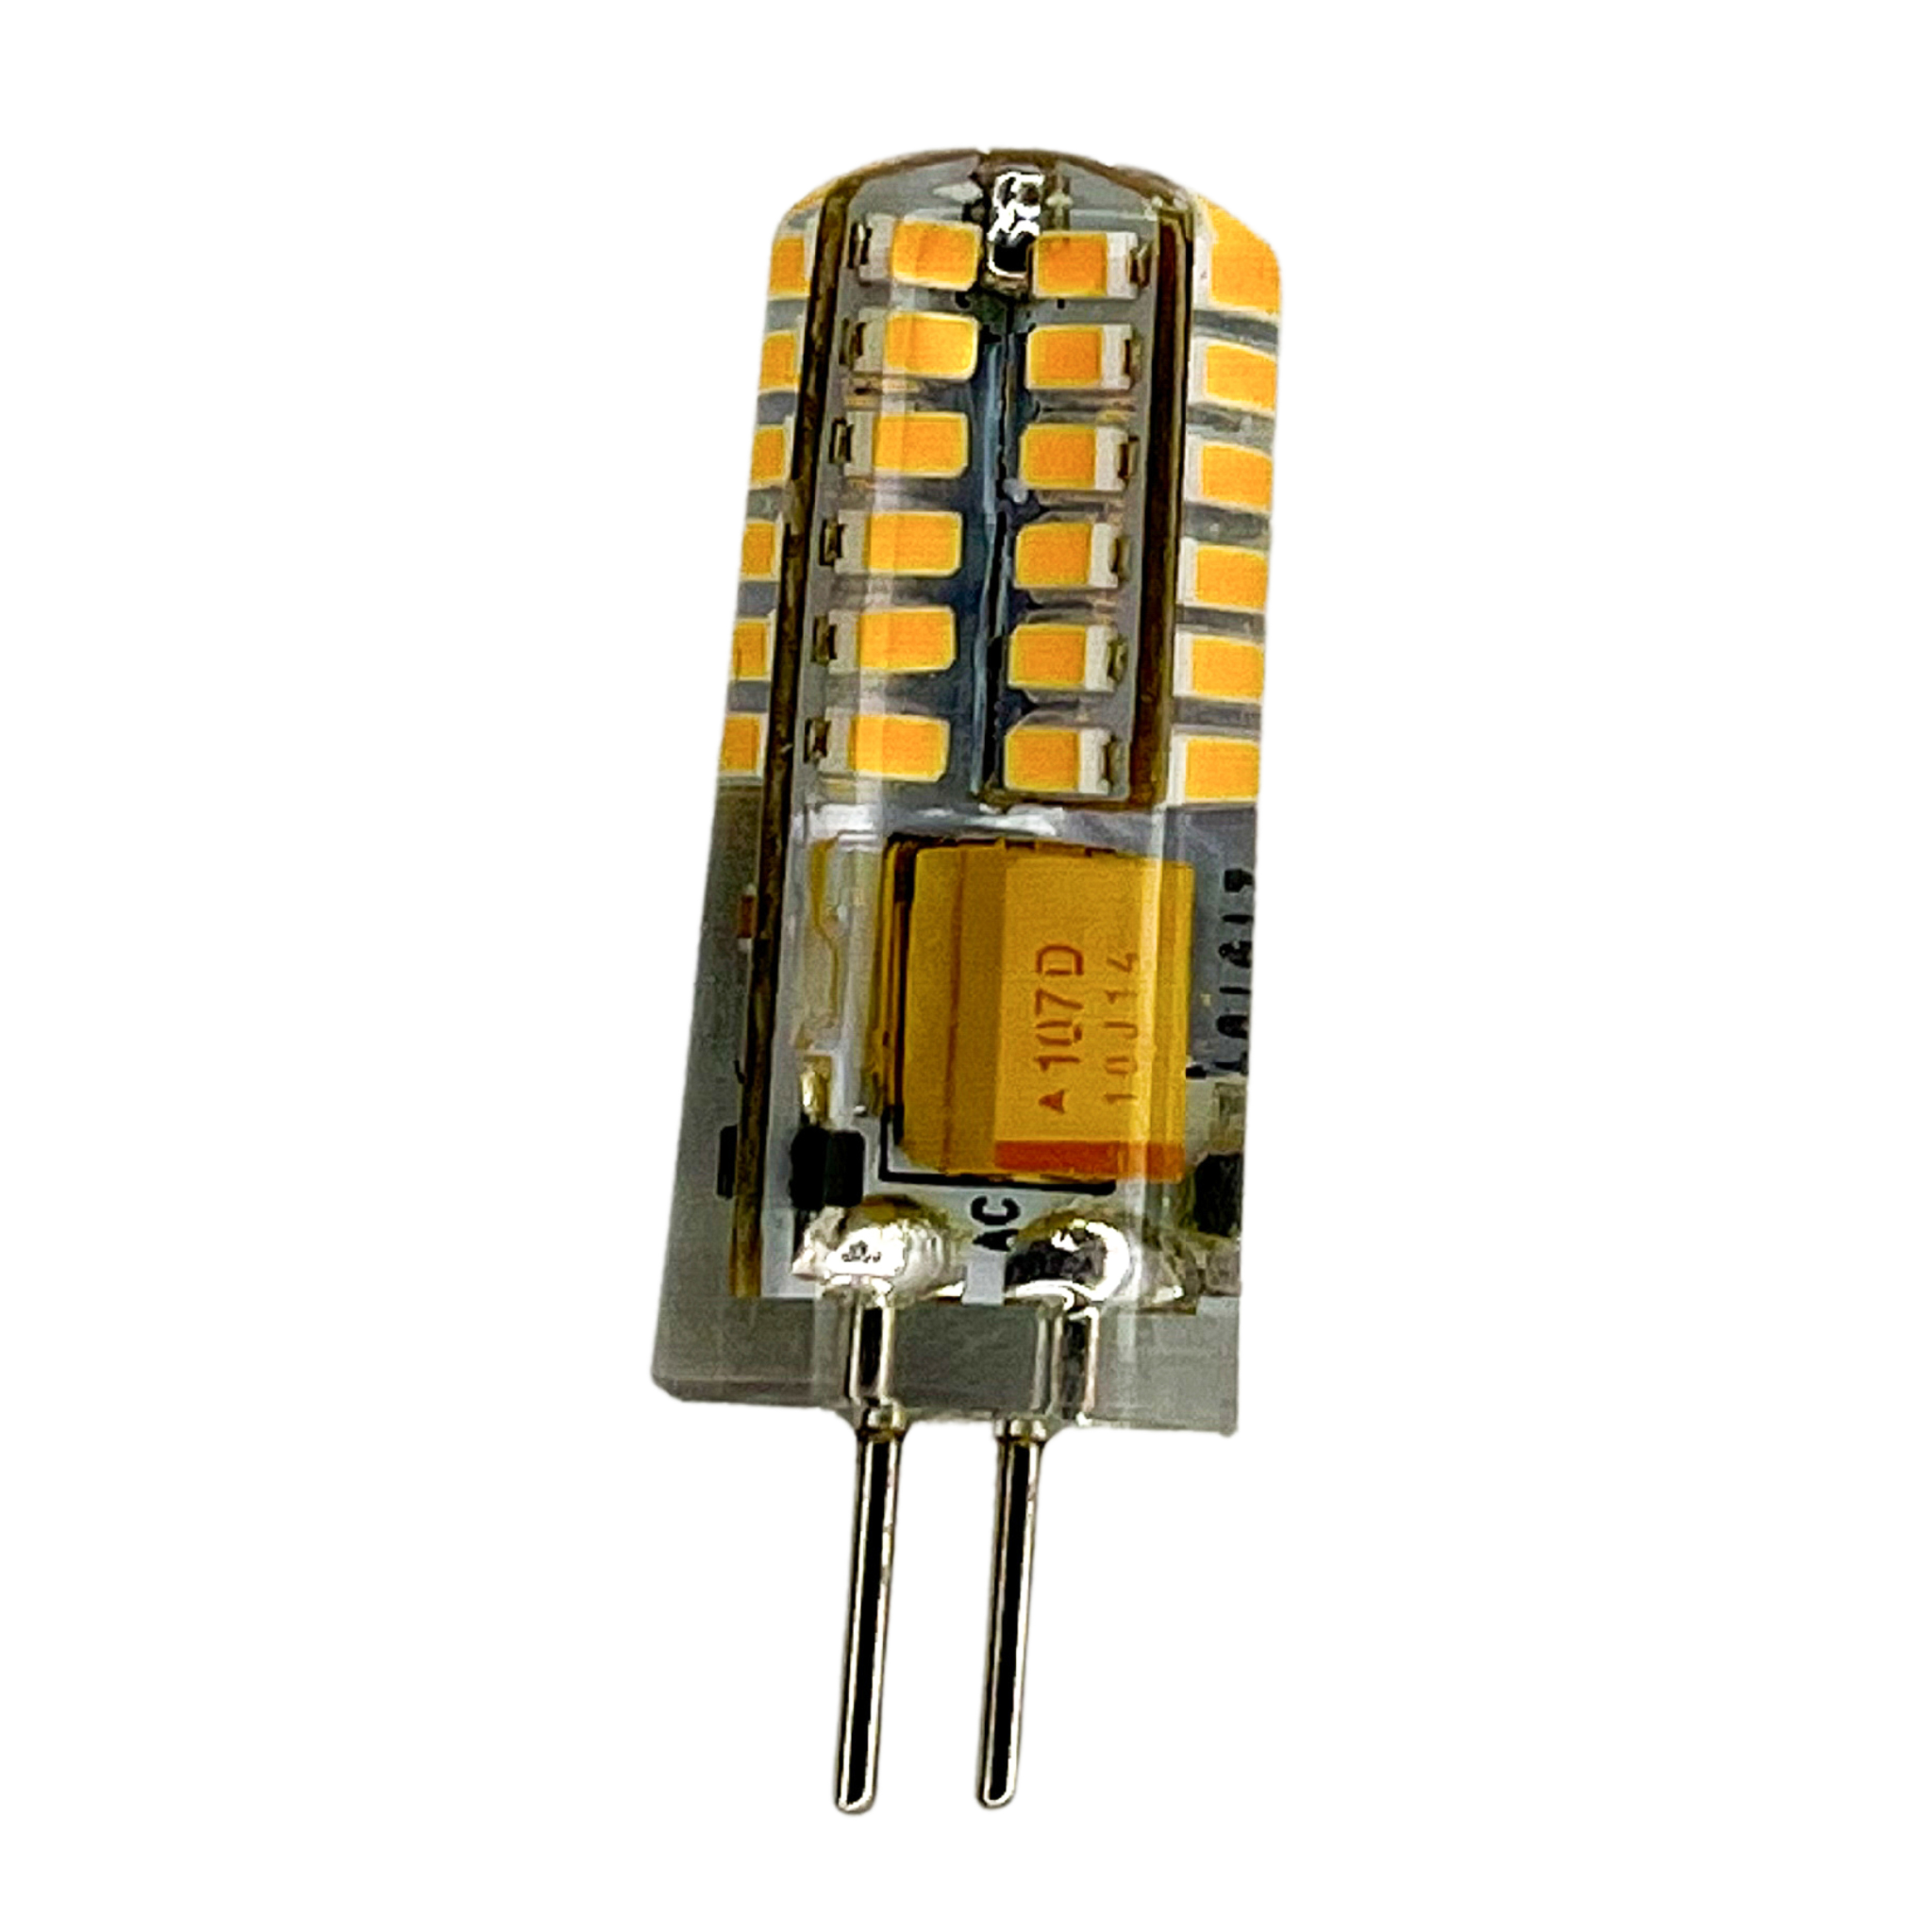 TopNotch™ T3 G4 Bi-Pin 107D LED Light Bulb - Water Resistant 50,000k Hrs -  Dimmable